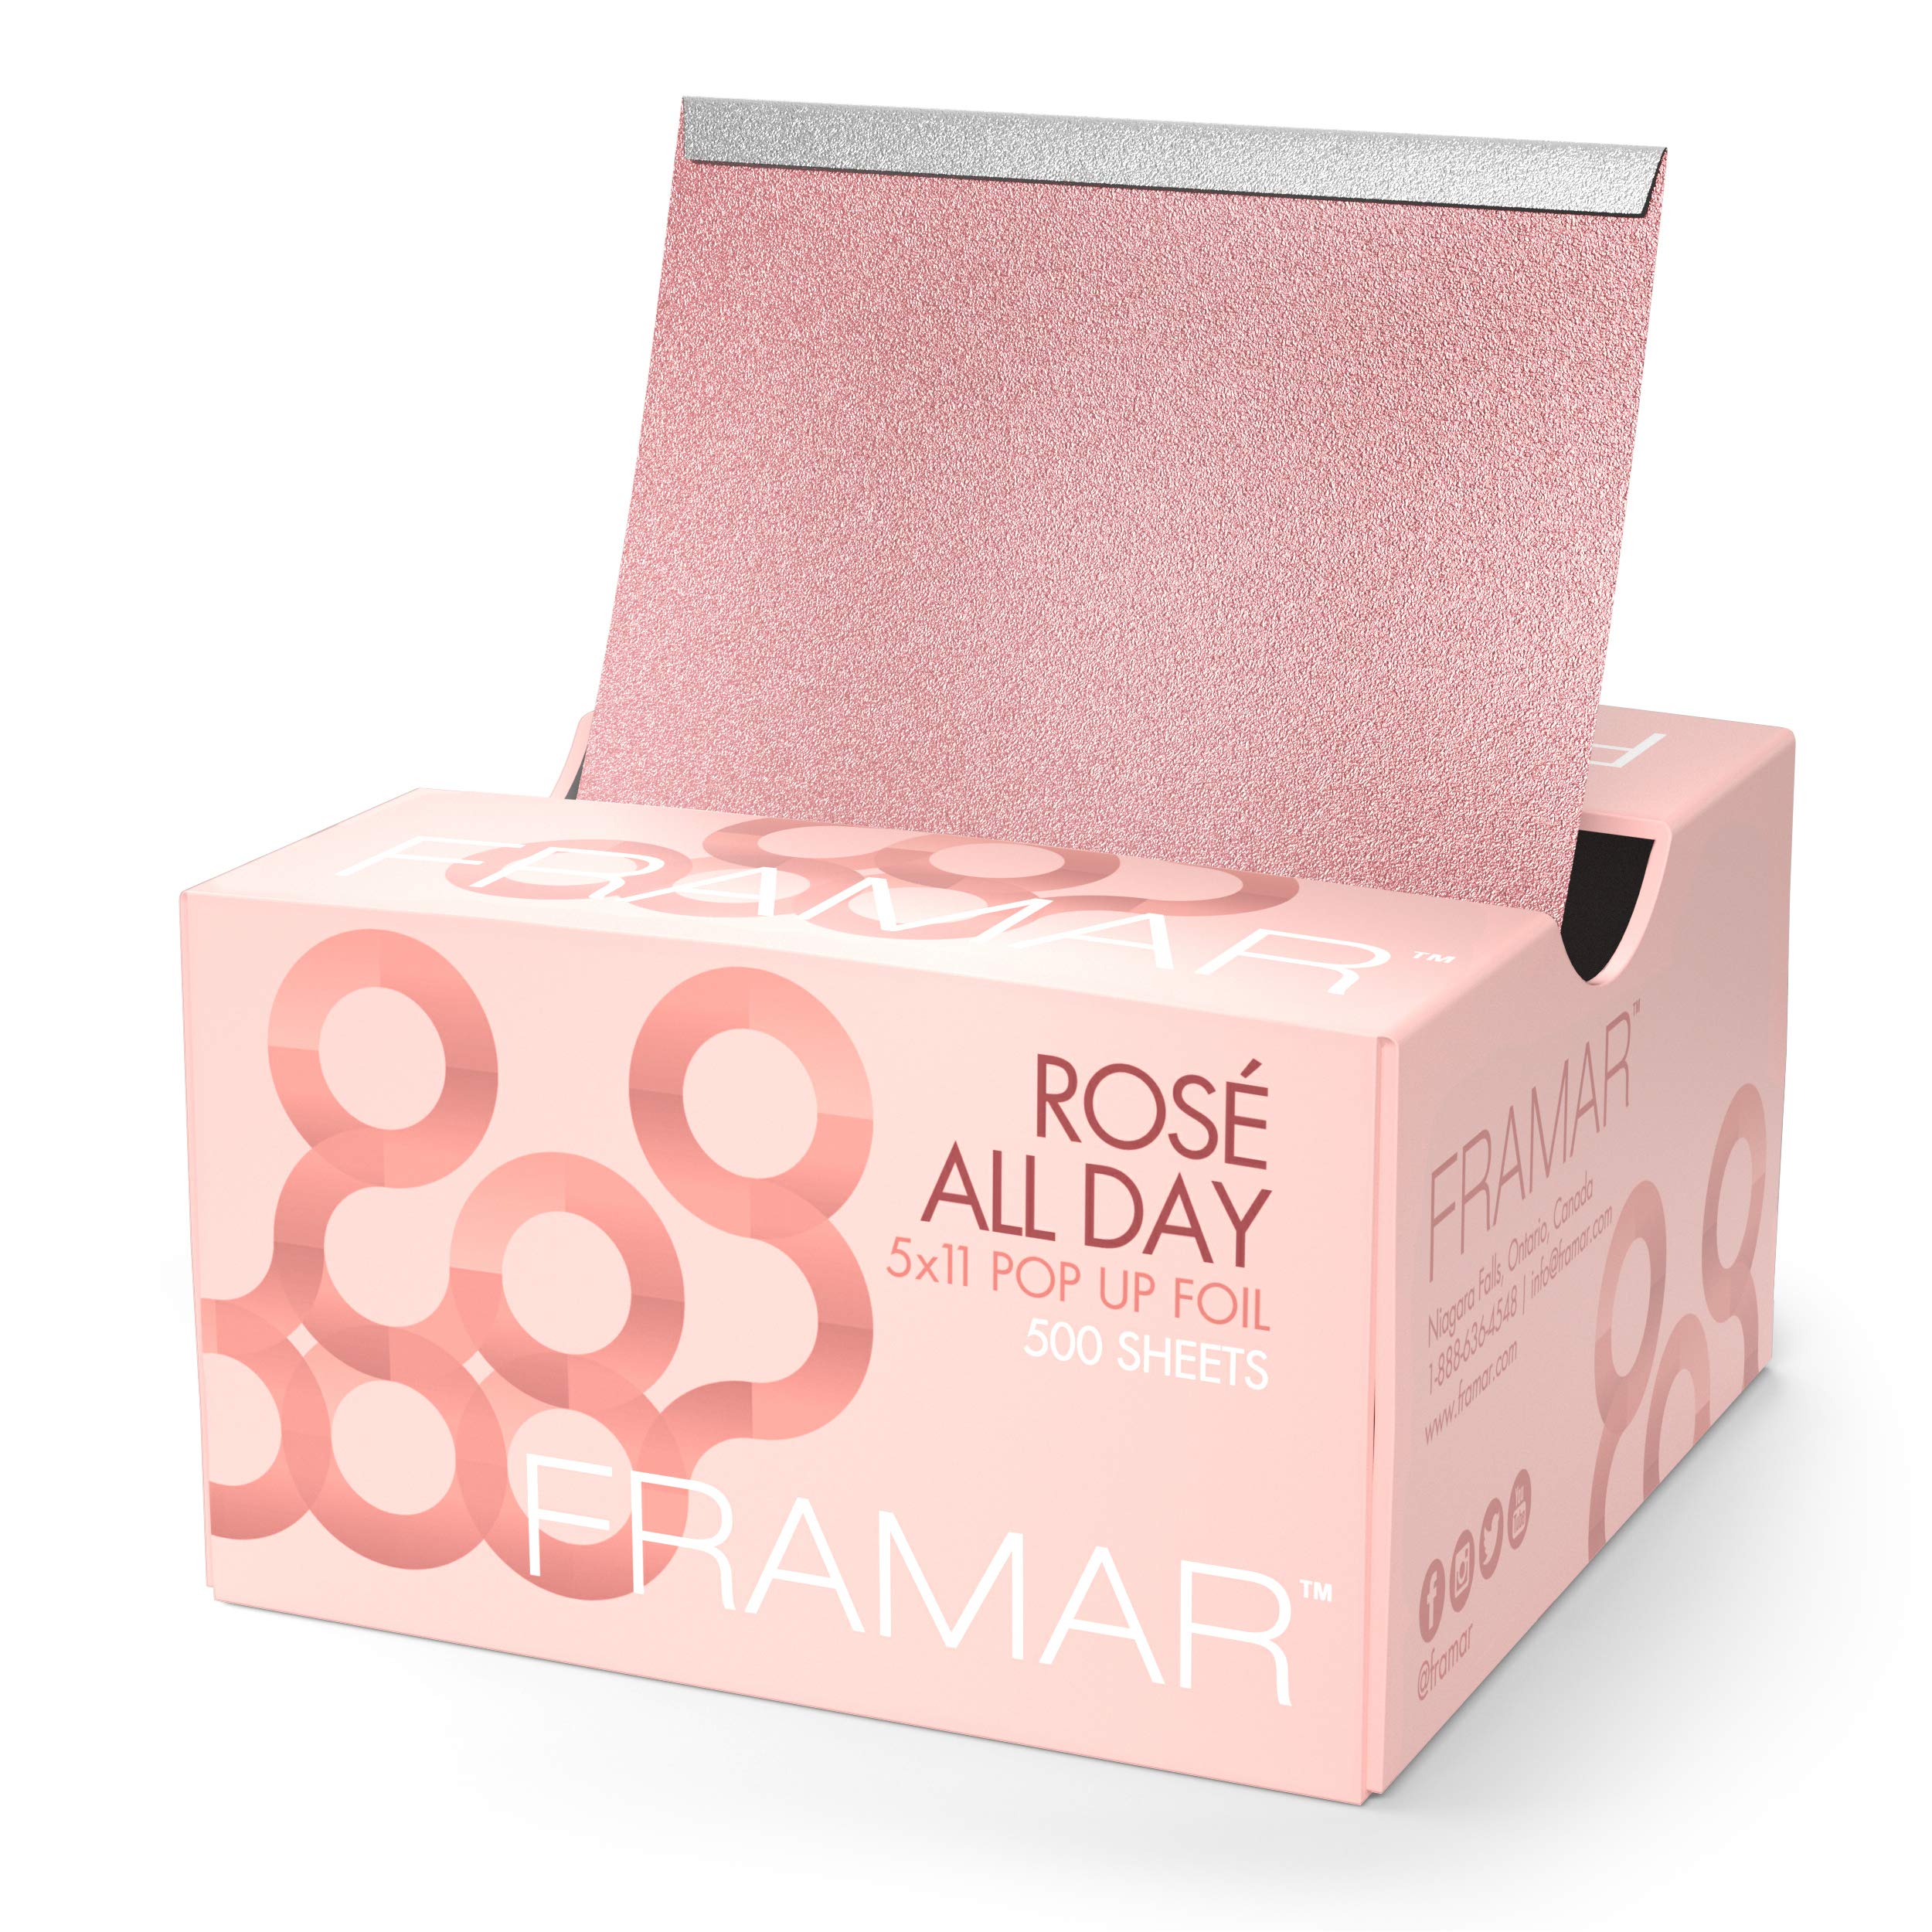 Framar Ros All Day Pop Up Hair Foil, Aluminum Foil Sheets, Hair Foils For  Highlighting - 500